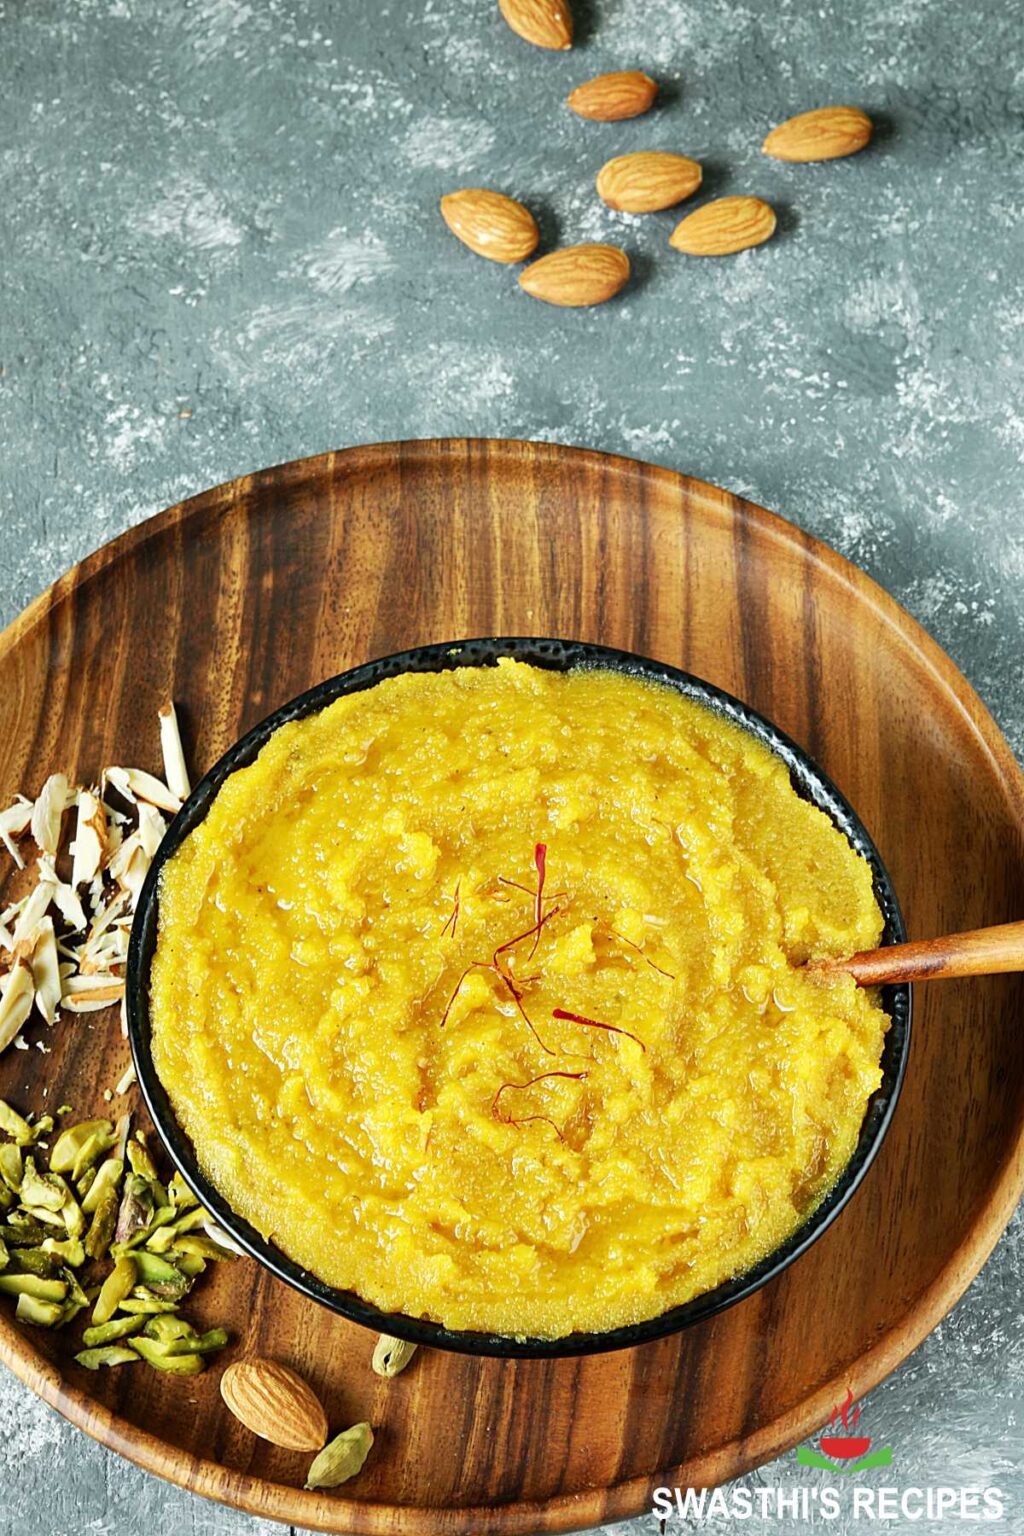 Badam halwa recipe (almond halwa) - Swasthi's Recipes